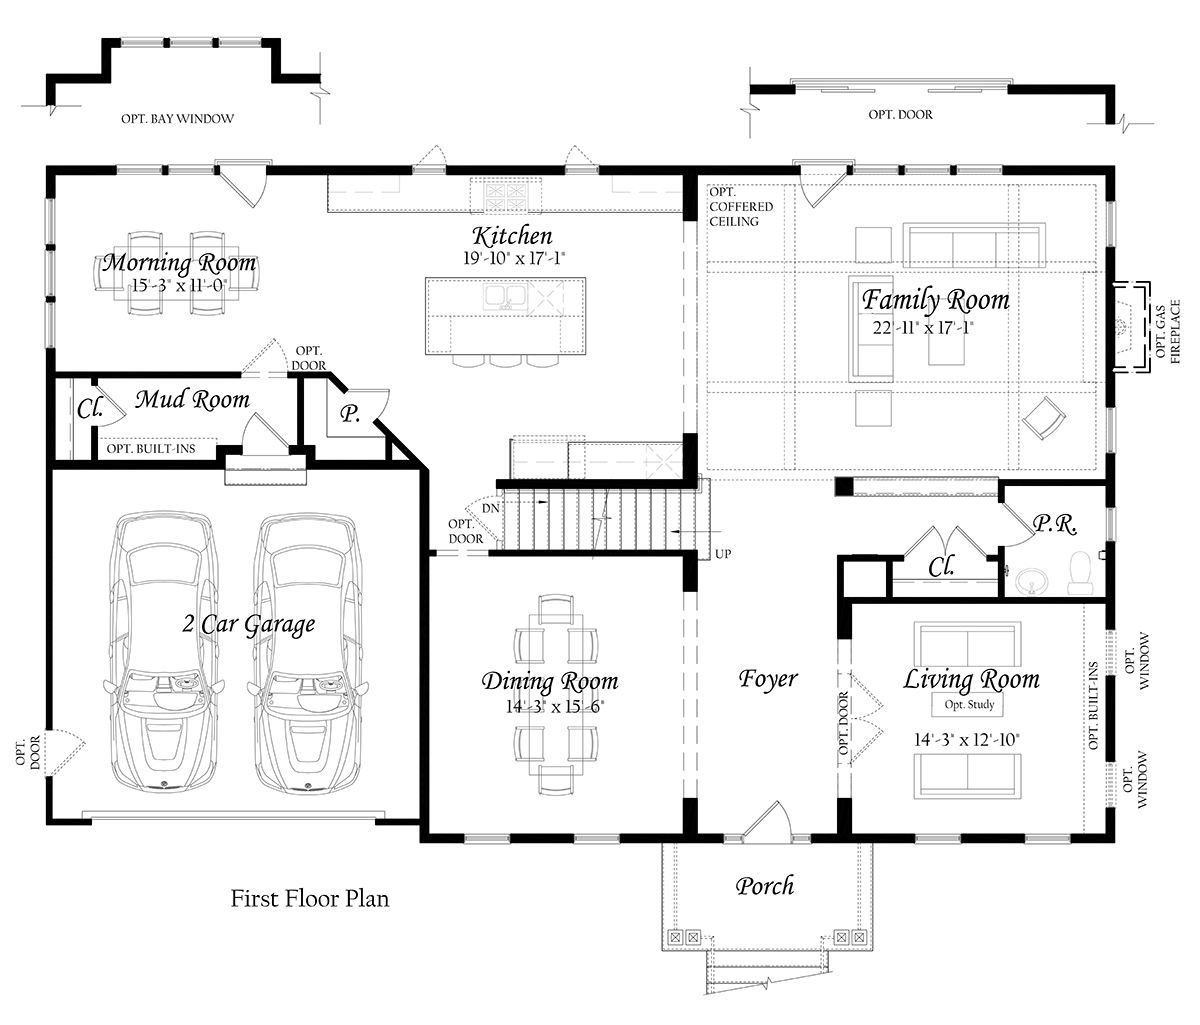 WEB EVGH - Floorplan - Poplar 30 - Main Level 111122